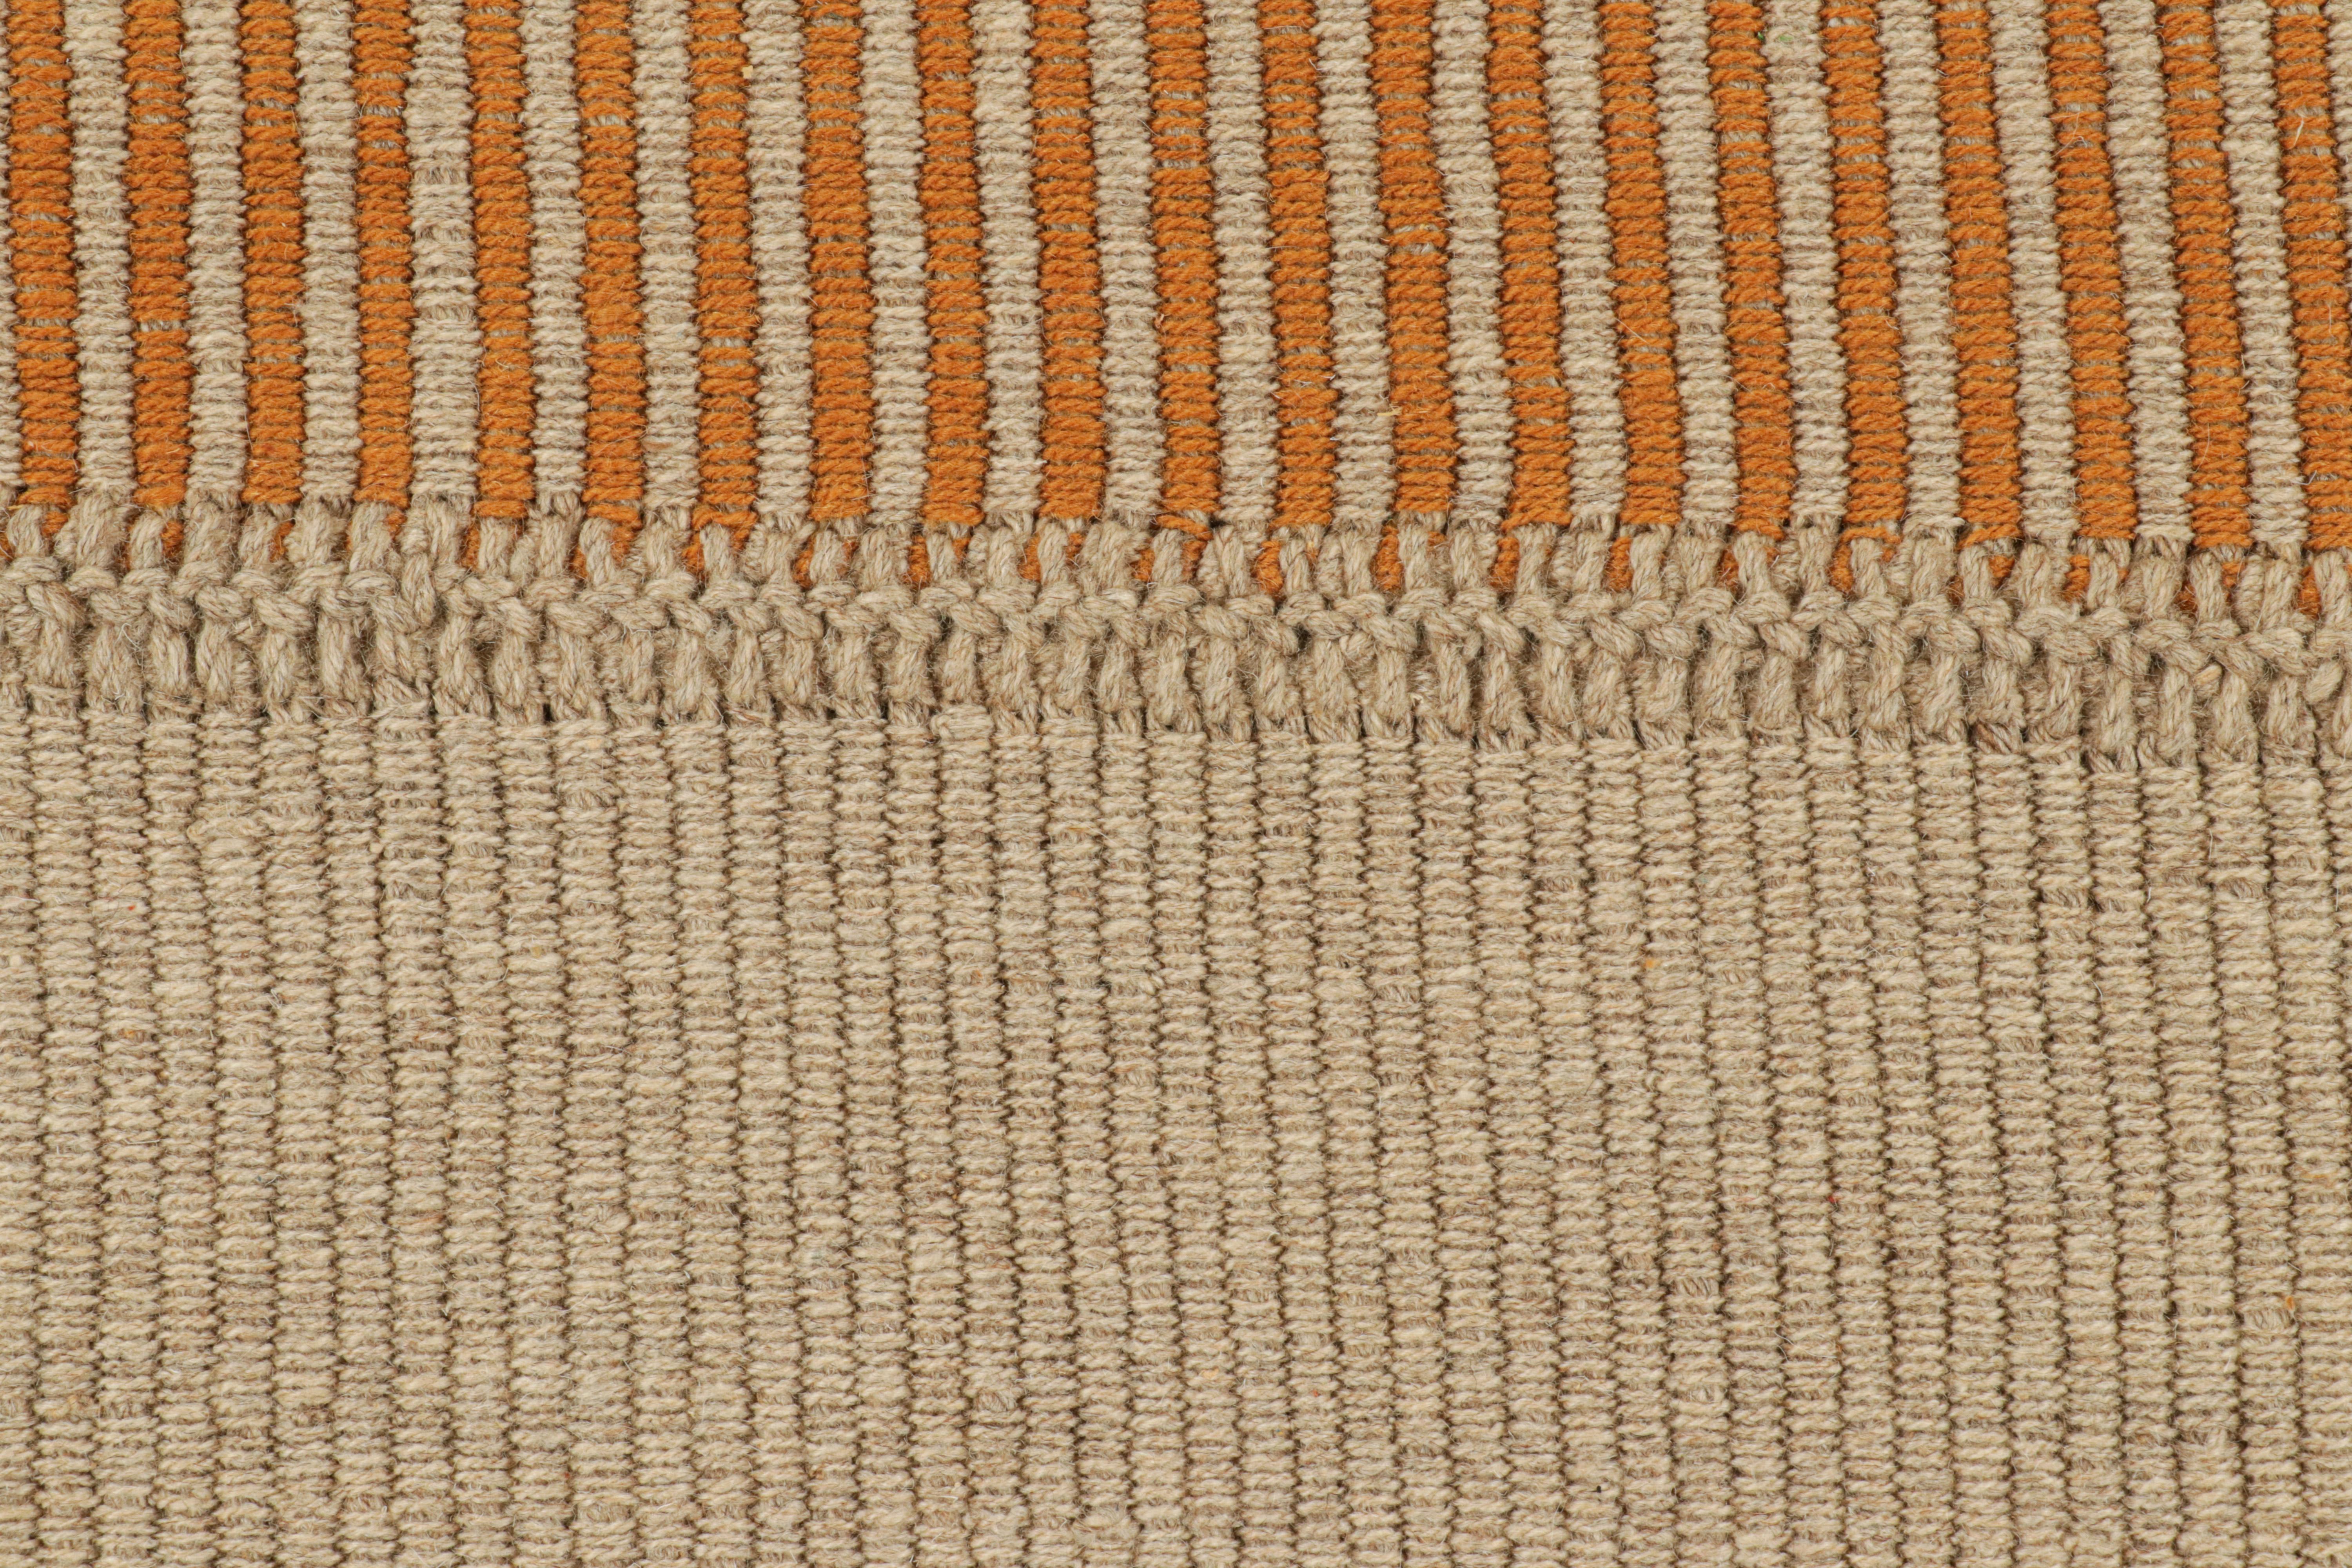 Modern Rug & Kilim’s Contemporary Kilim in Orange and Beige Textural Stripes For Sale